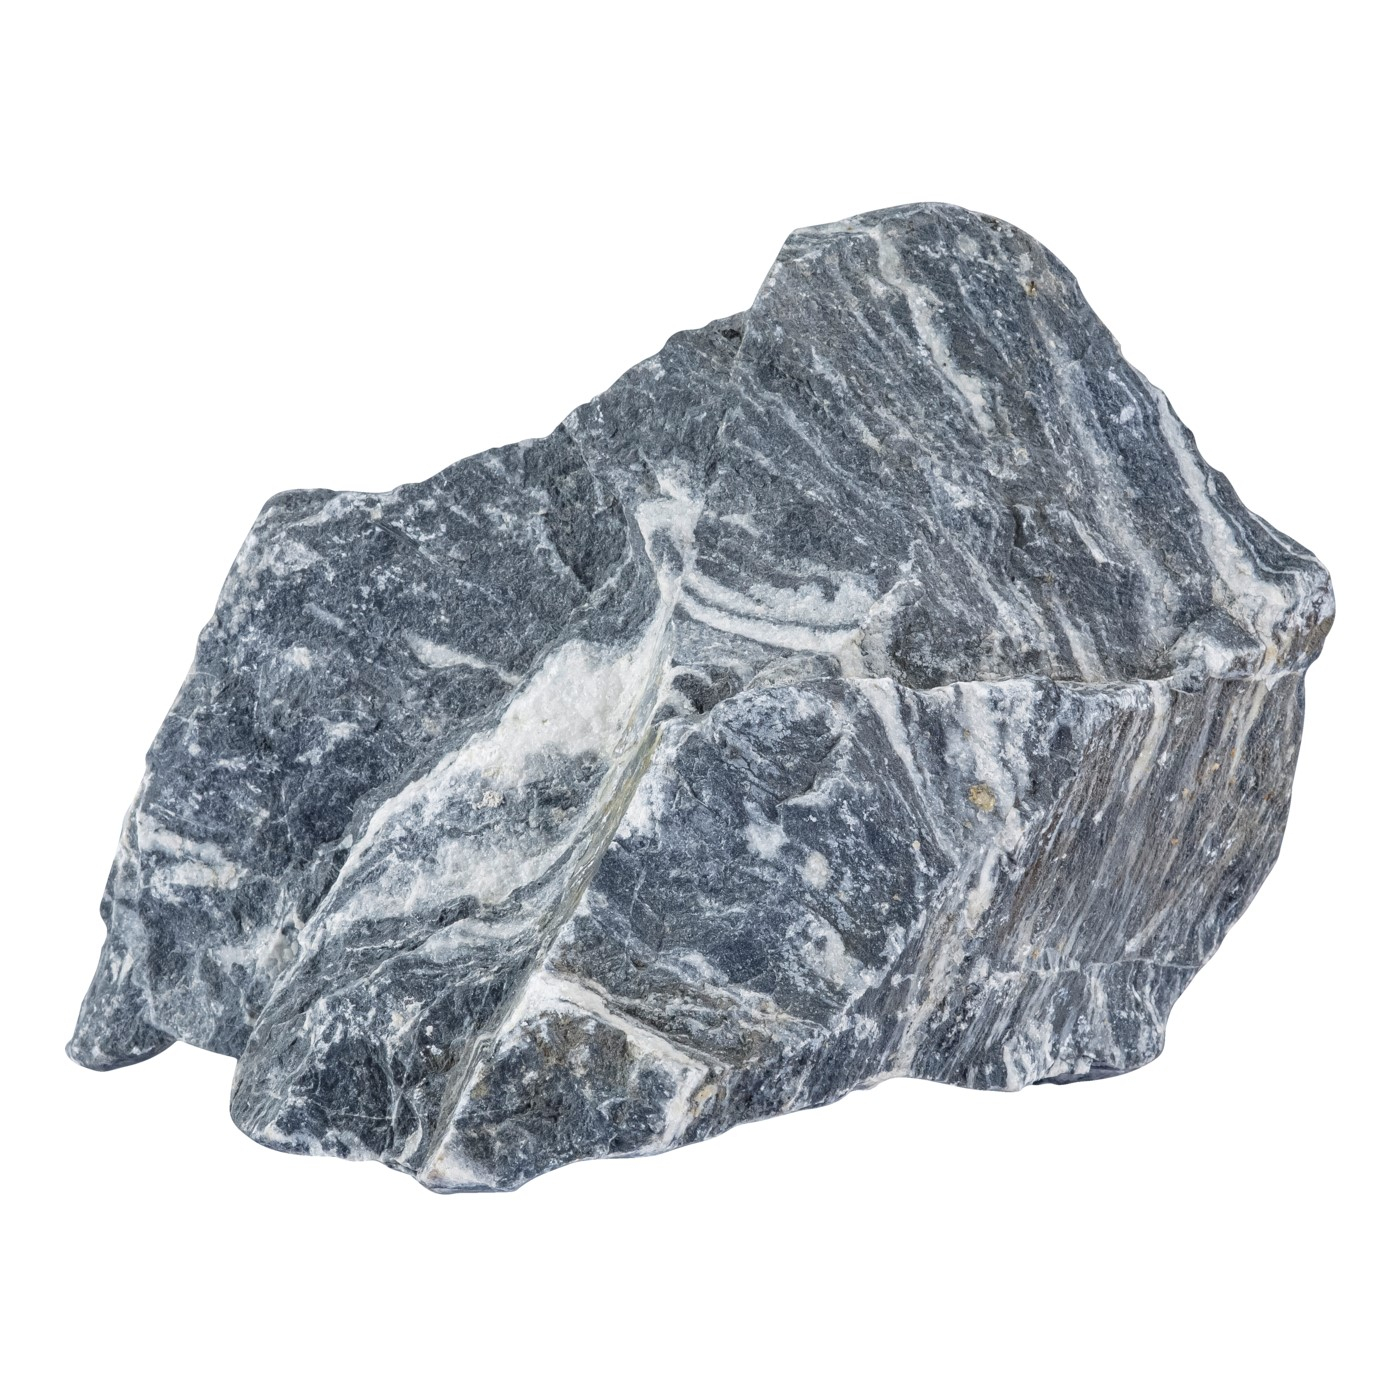 Sera Rock Zebra Stone Roccia naturale grigia e bianca aquascaping